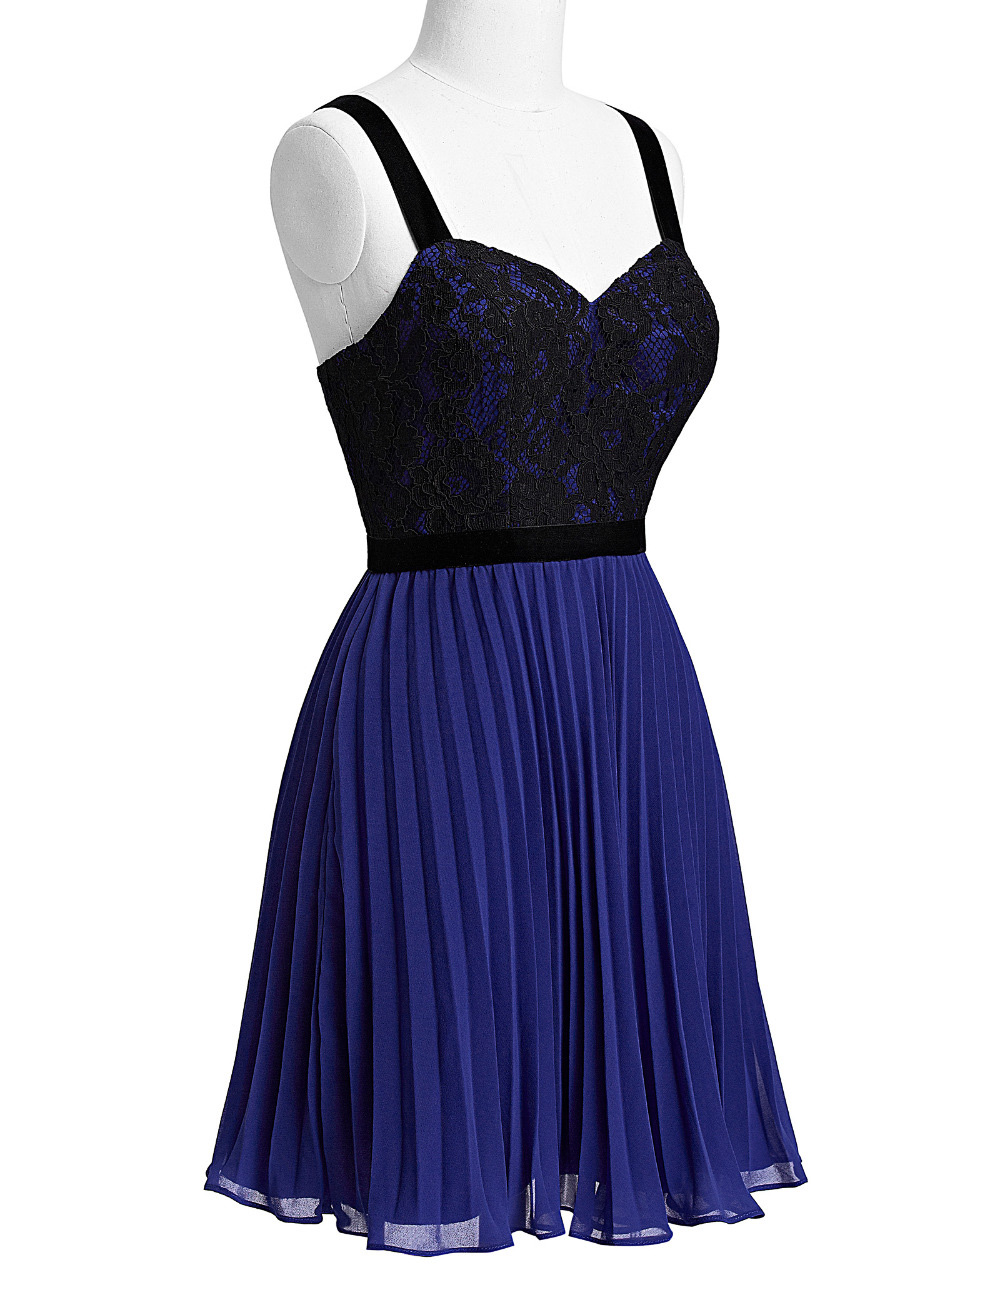 Royal Blue Spaghetti Straps Short Bridesmaid Dresses, Mint Prom Dresses, Elegant Party Dresses, Formal Gowns